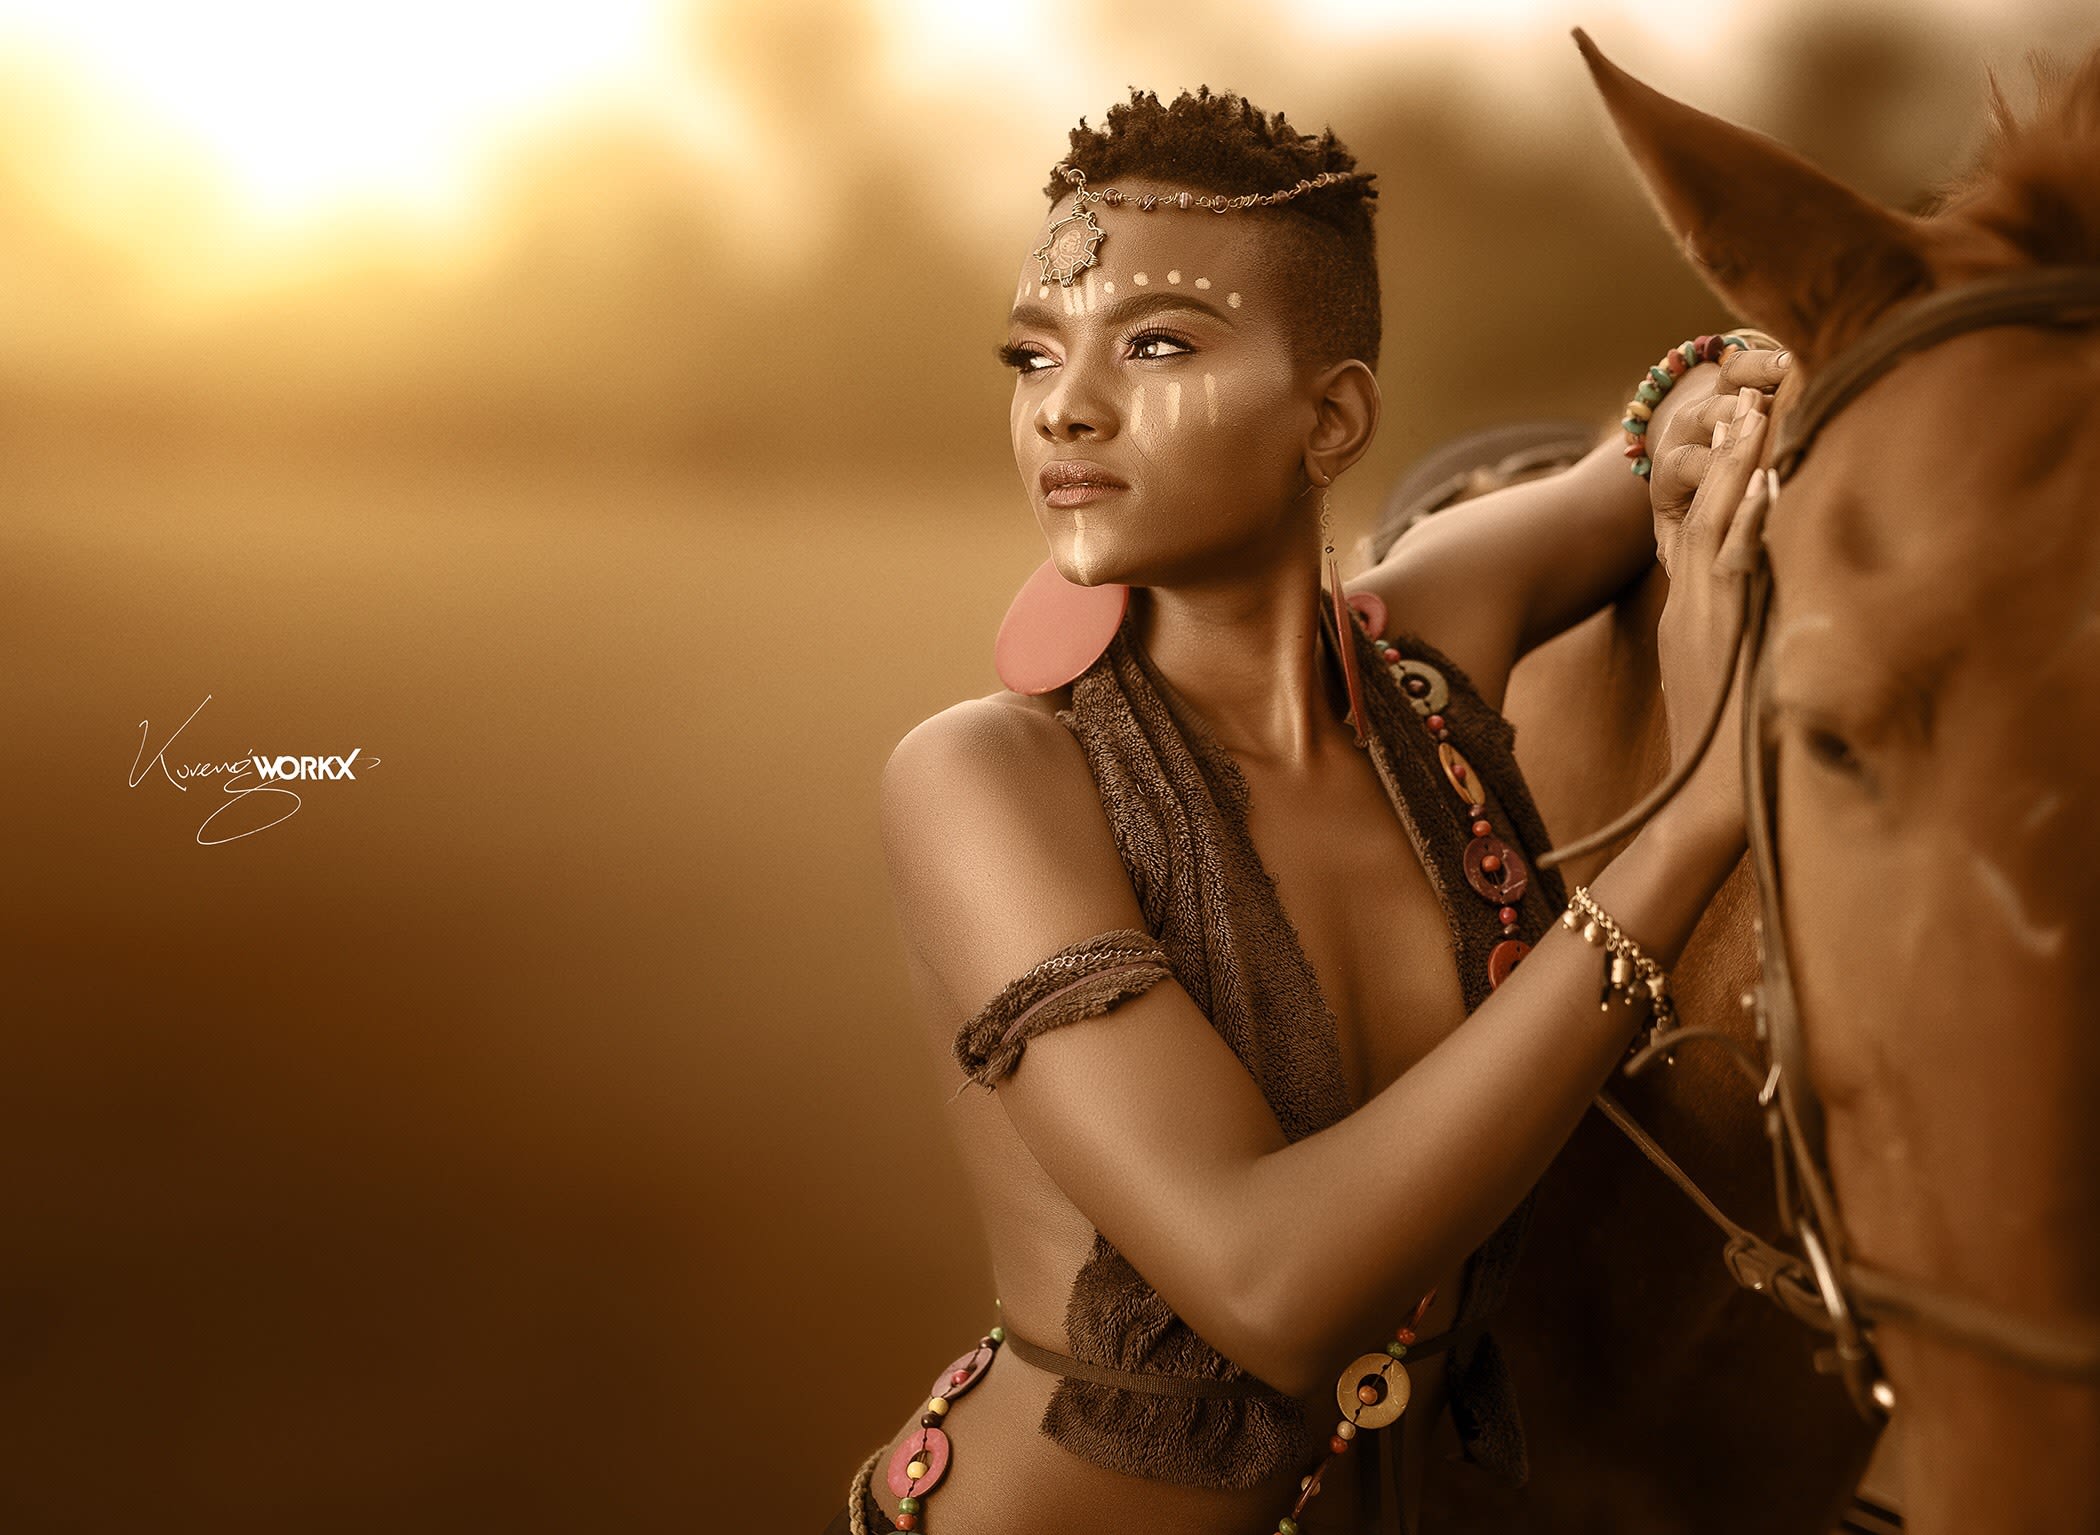 african princess warrior